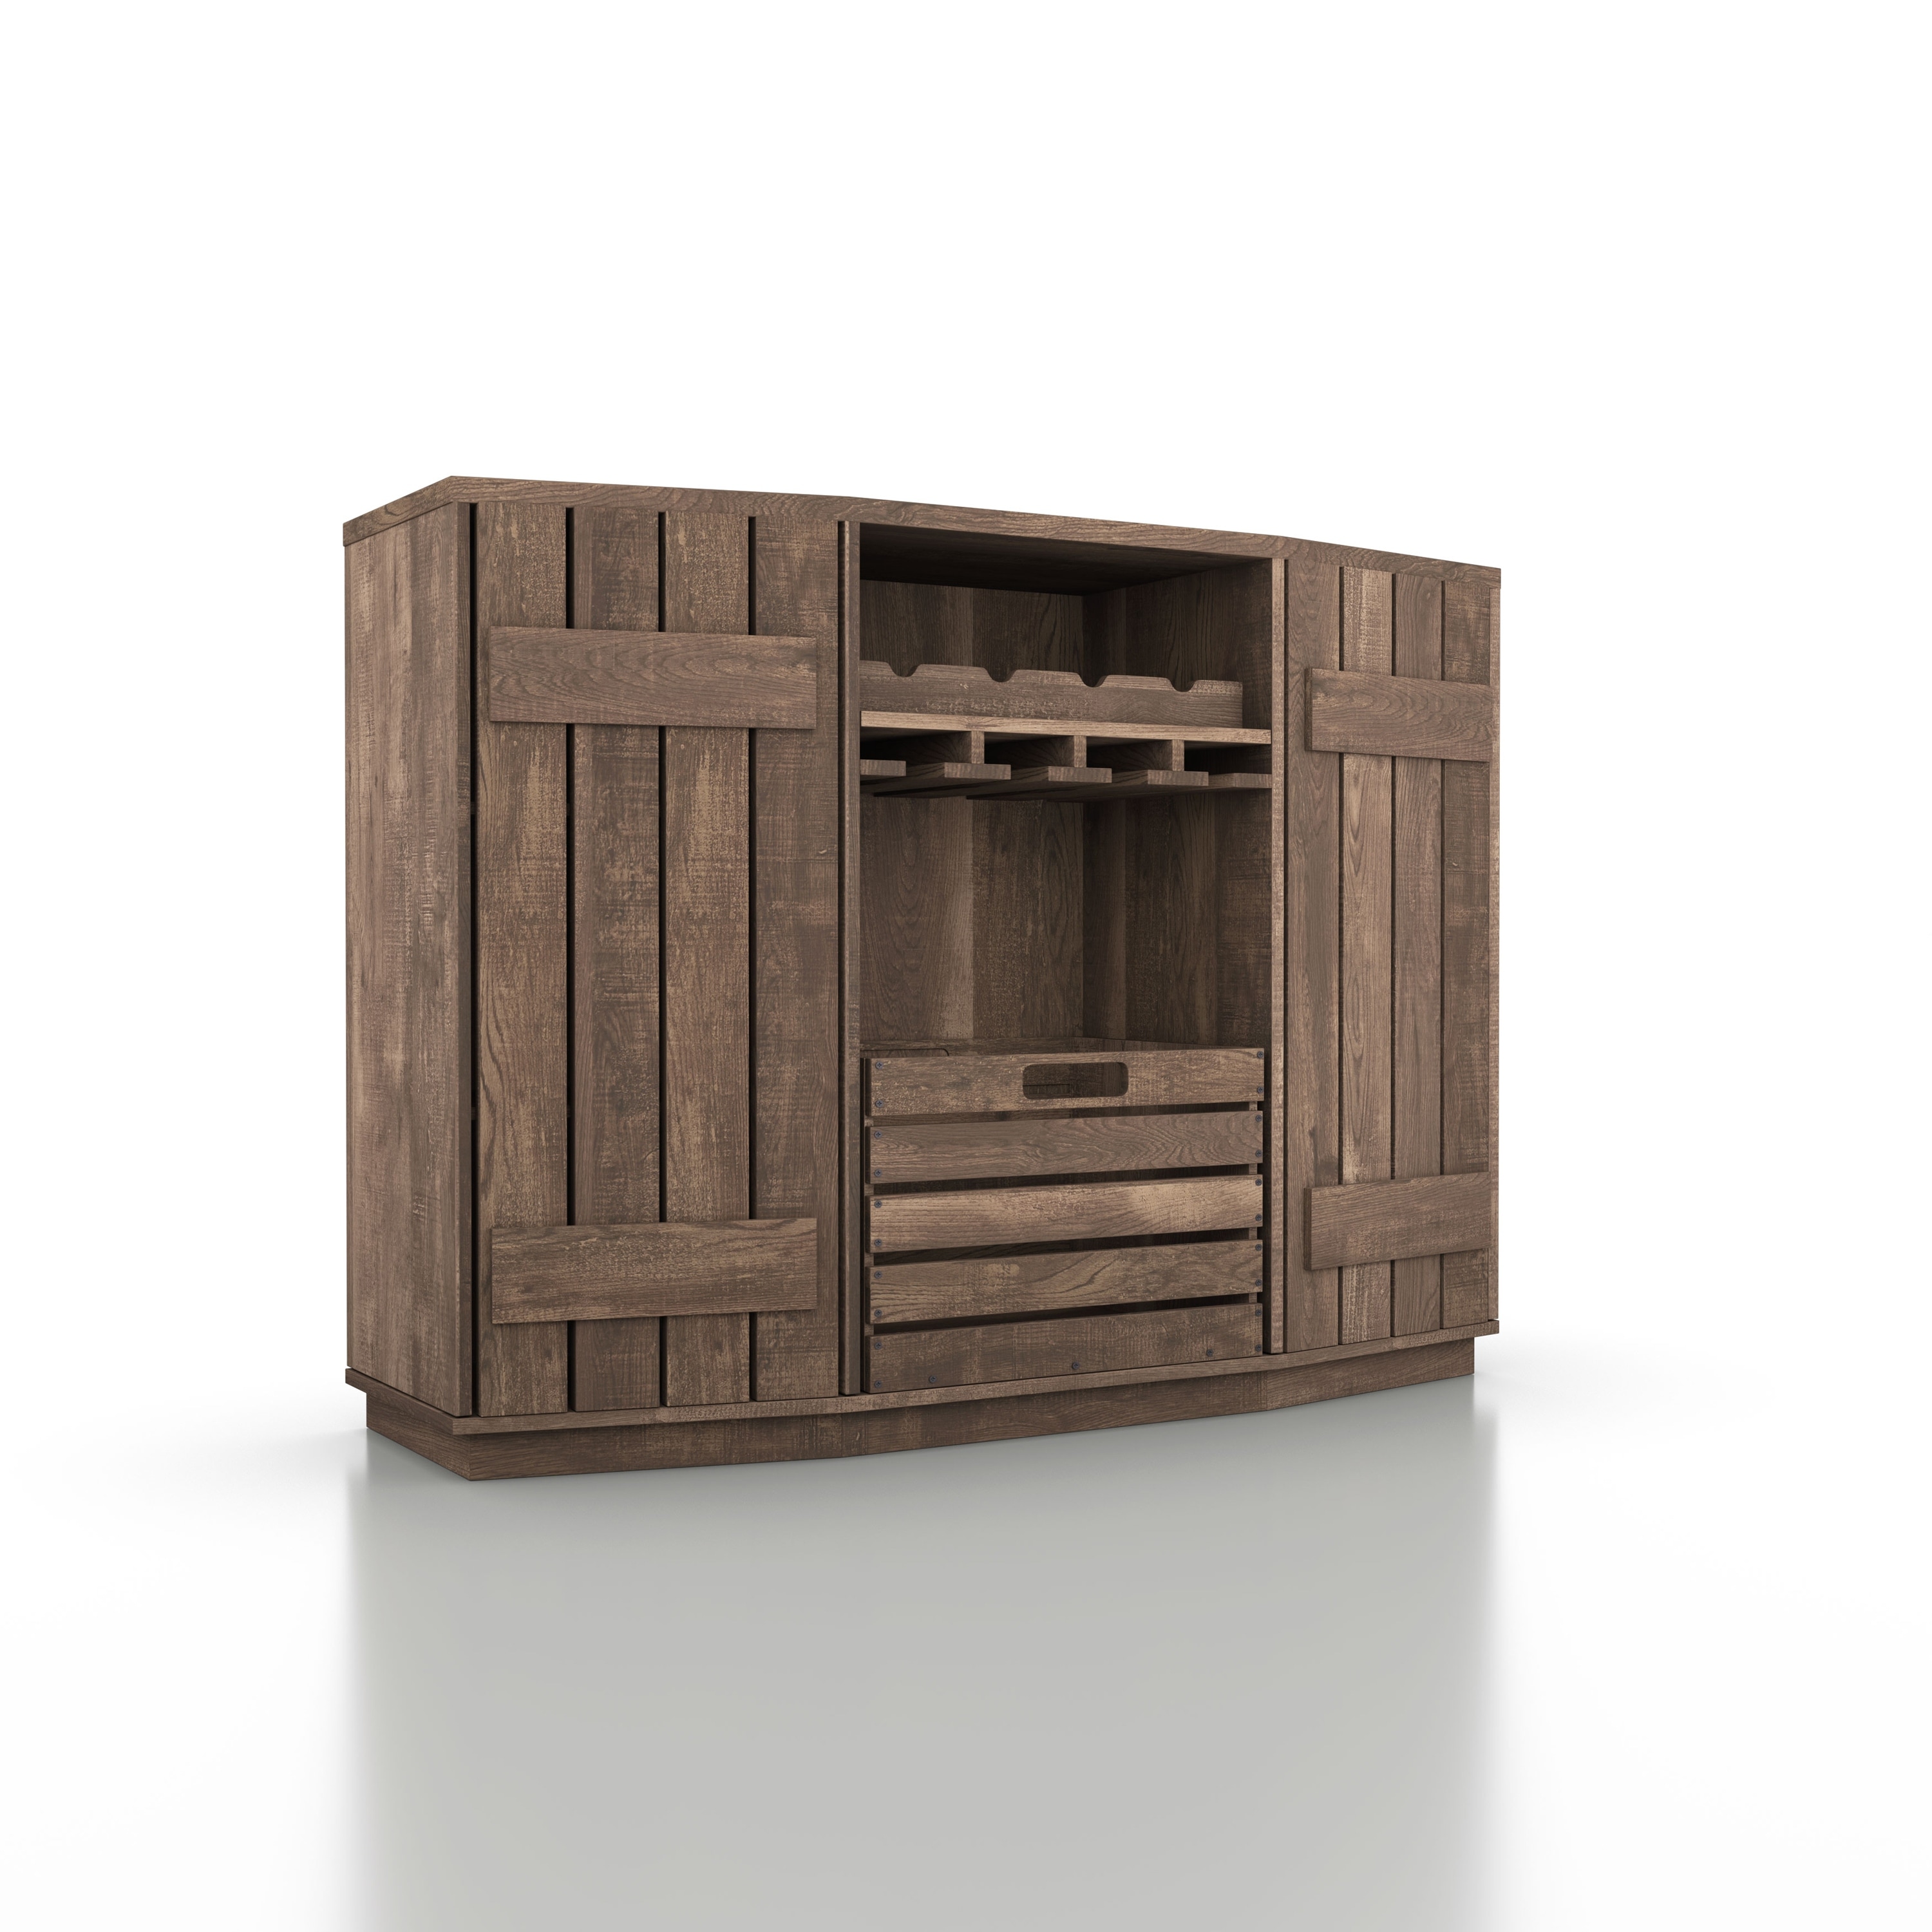 Harris Rustic Wood Multi-Storage Buffet, Reclaimed Oak - Bed Bath & Beyond  - 37998704